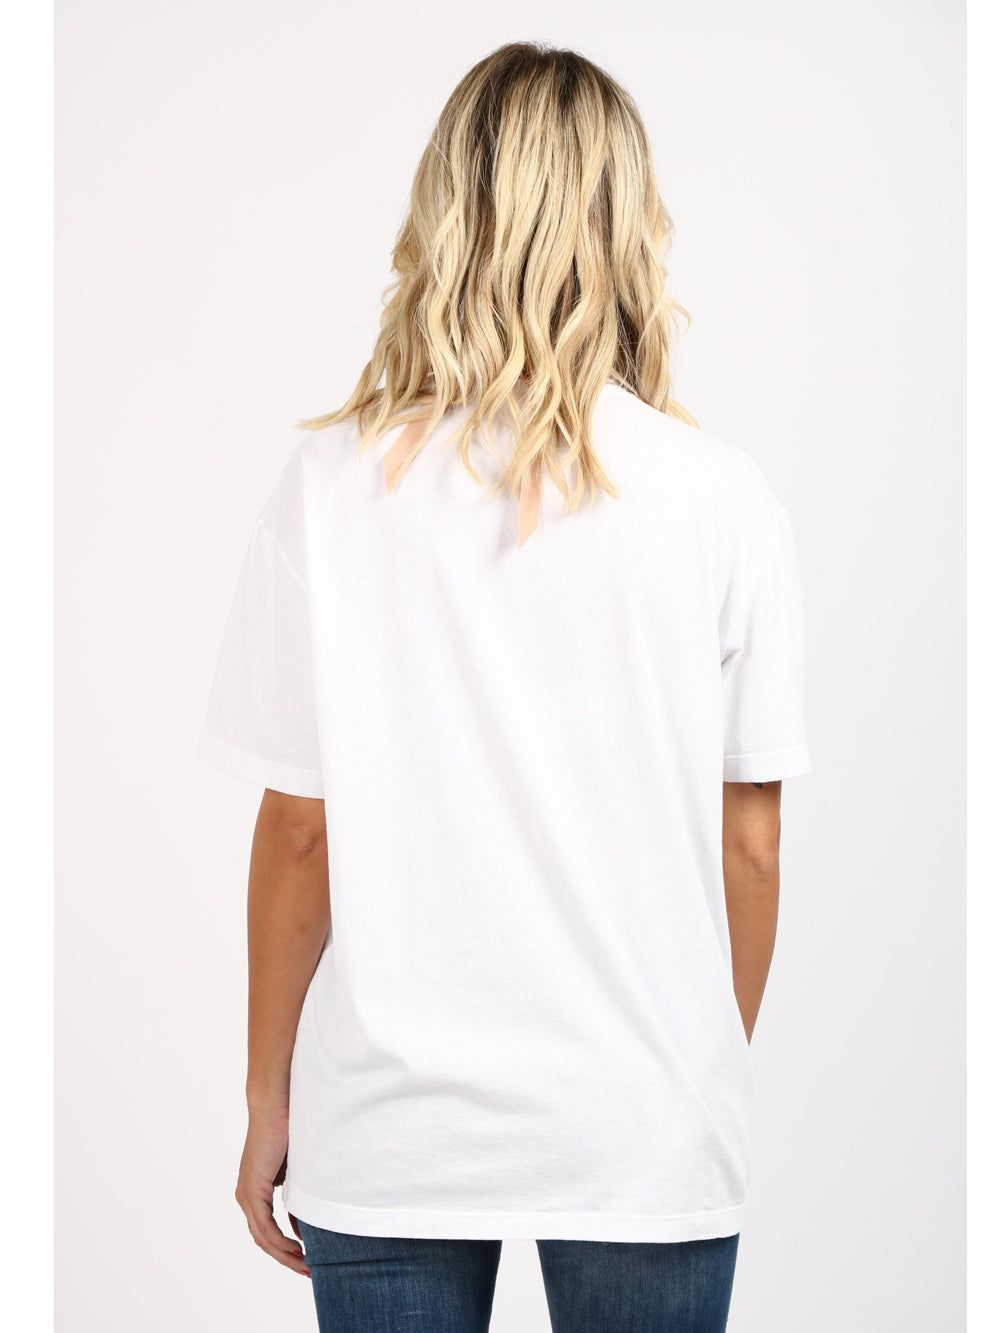 N°21 T-Shirt Girocollo in Cotone Bianca con Logo N°21 Nero Bianco